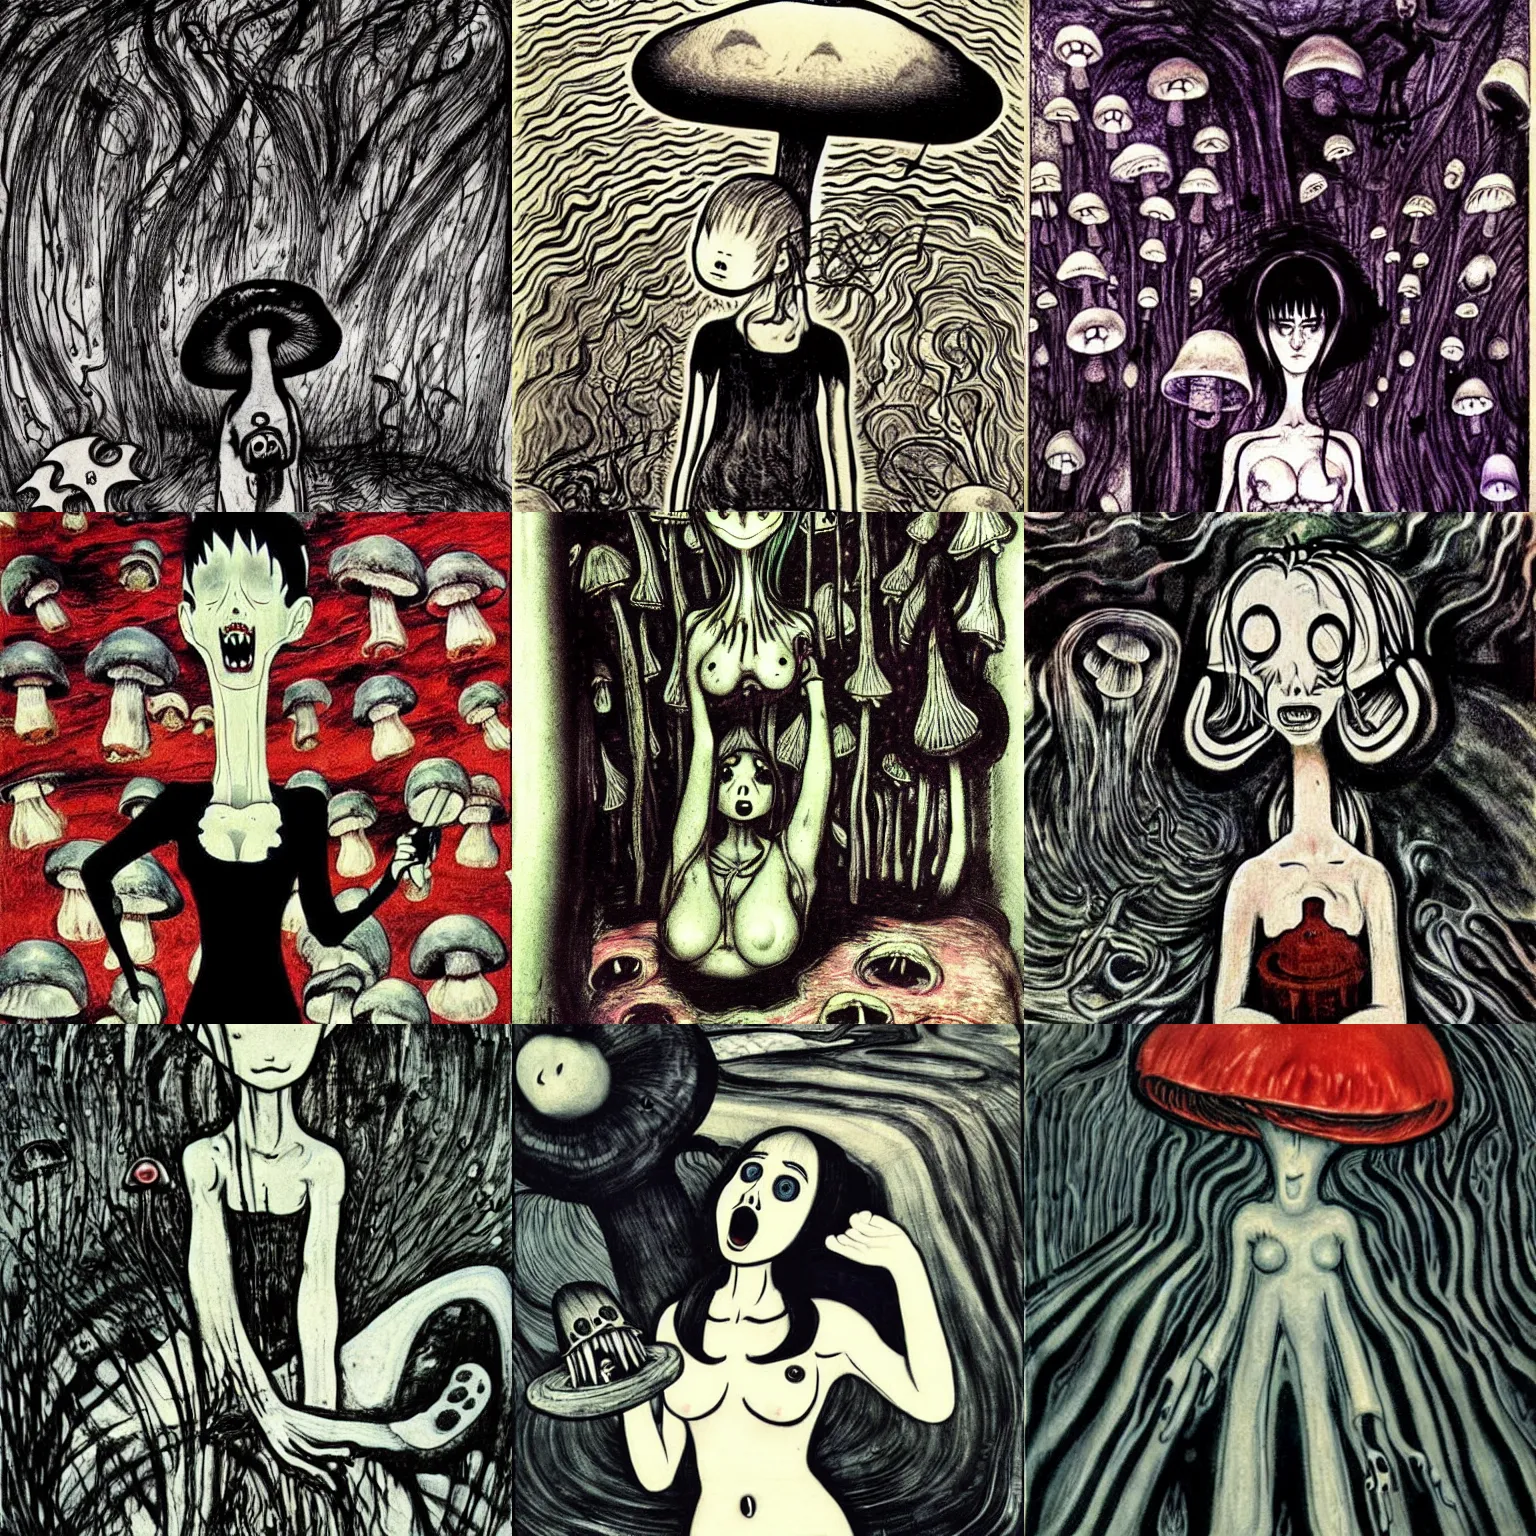 Prompt: creepy horror anime mushroom maid, mushrooms, scary dark painting by h. r. giger edvard munch and jungi ito